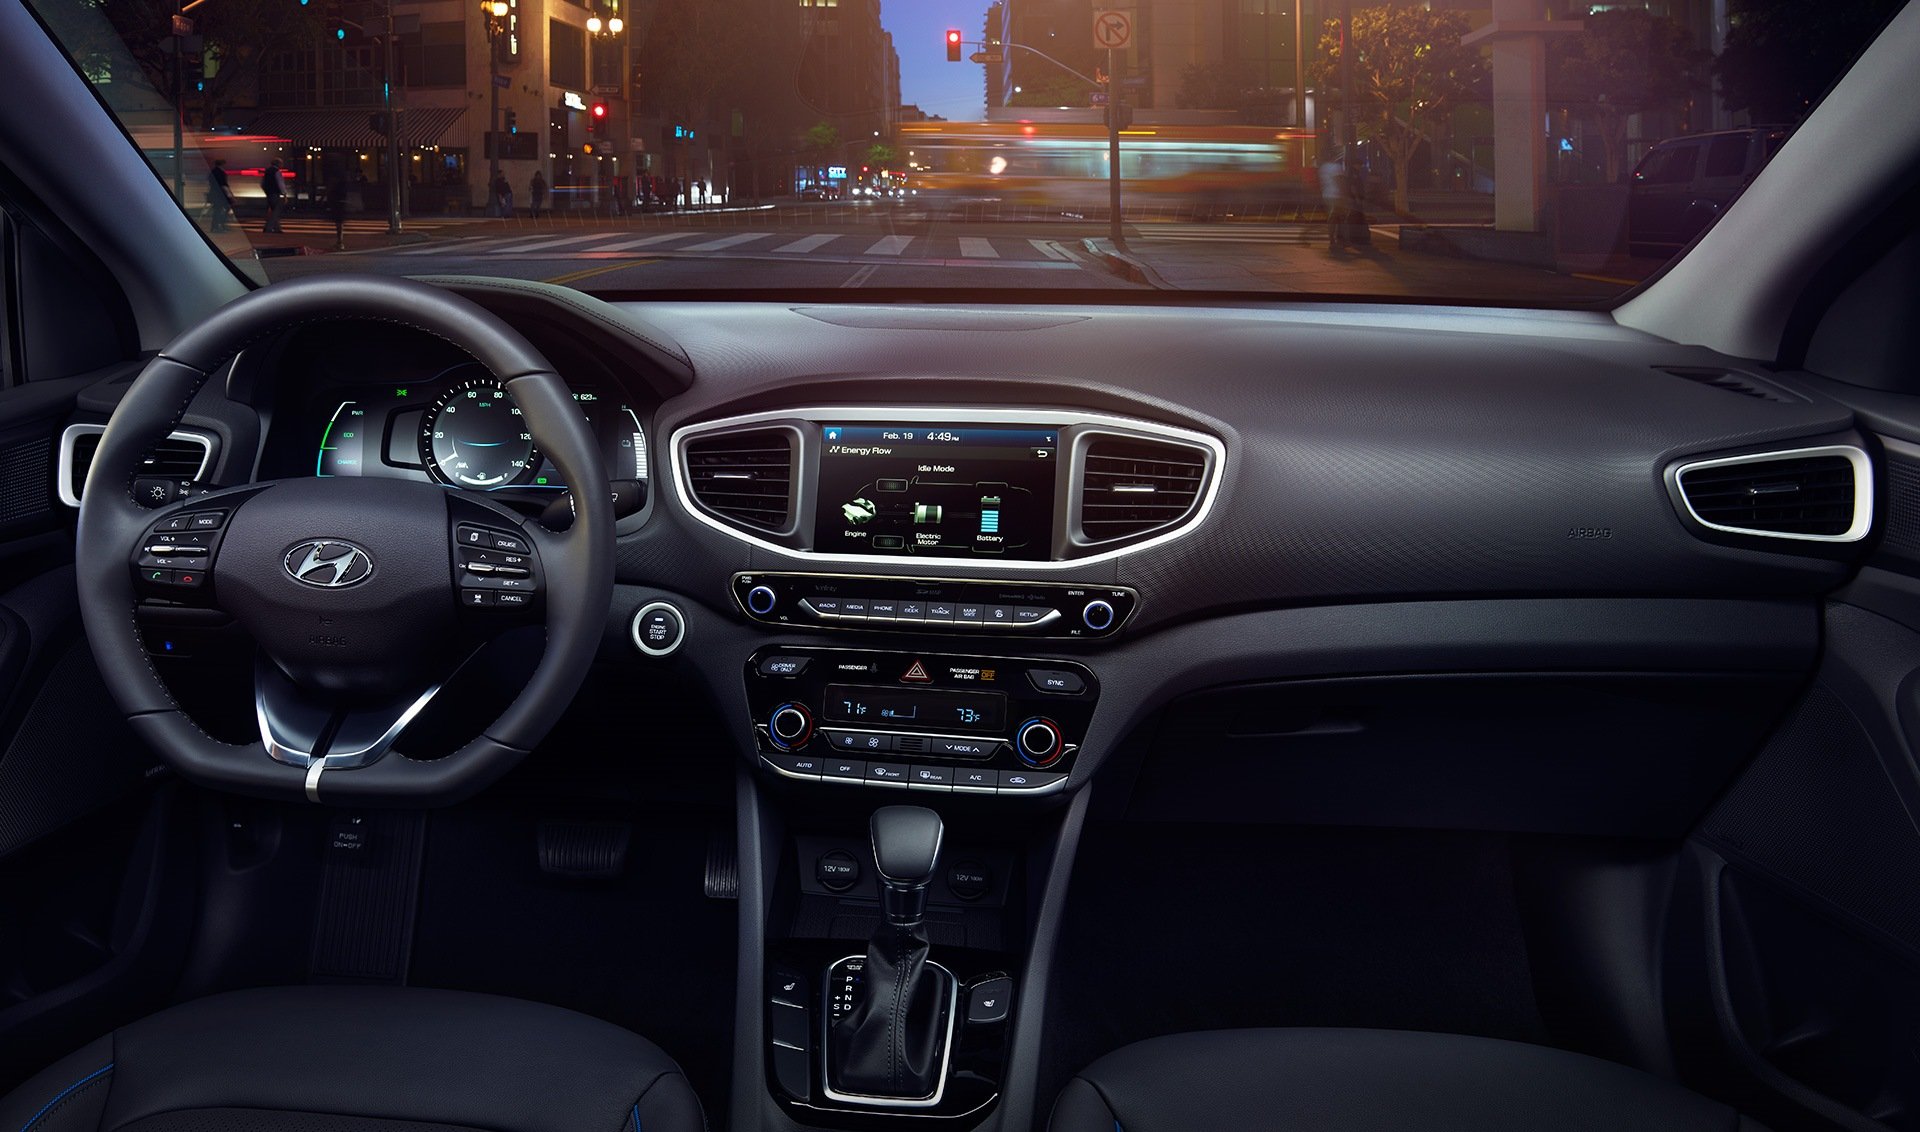 Hyundai Ioniq interior - Cockpit